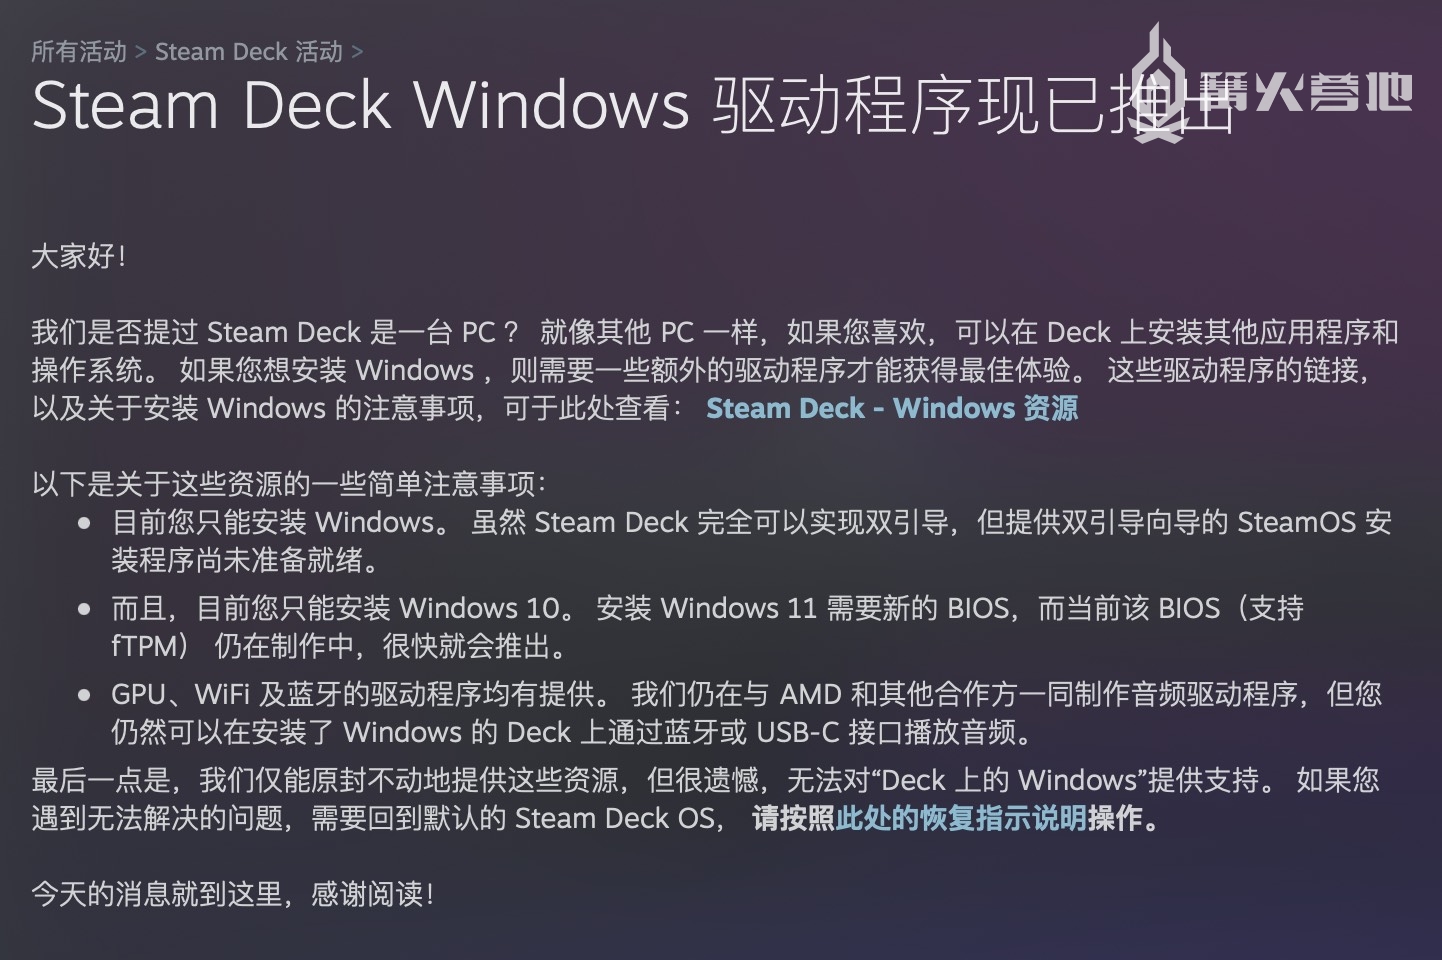 Steam Deck 现已提供驱动支持安装运行 Windows